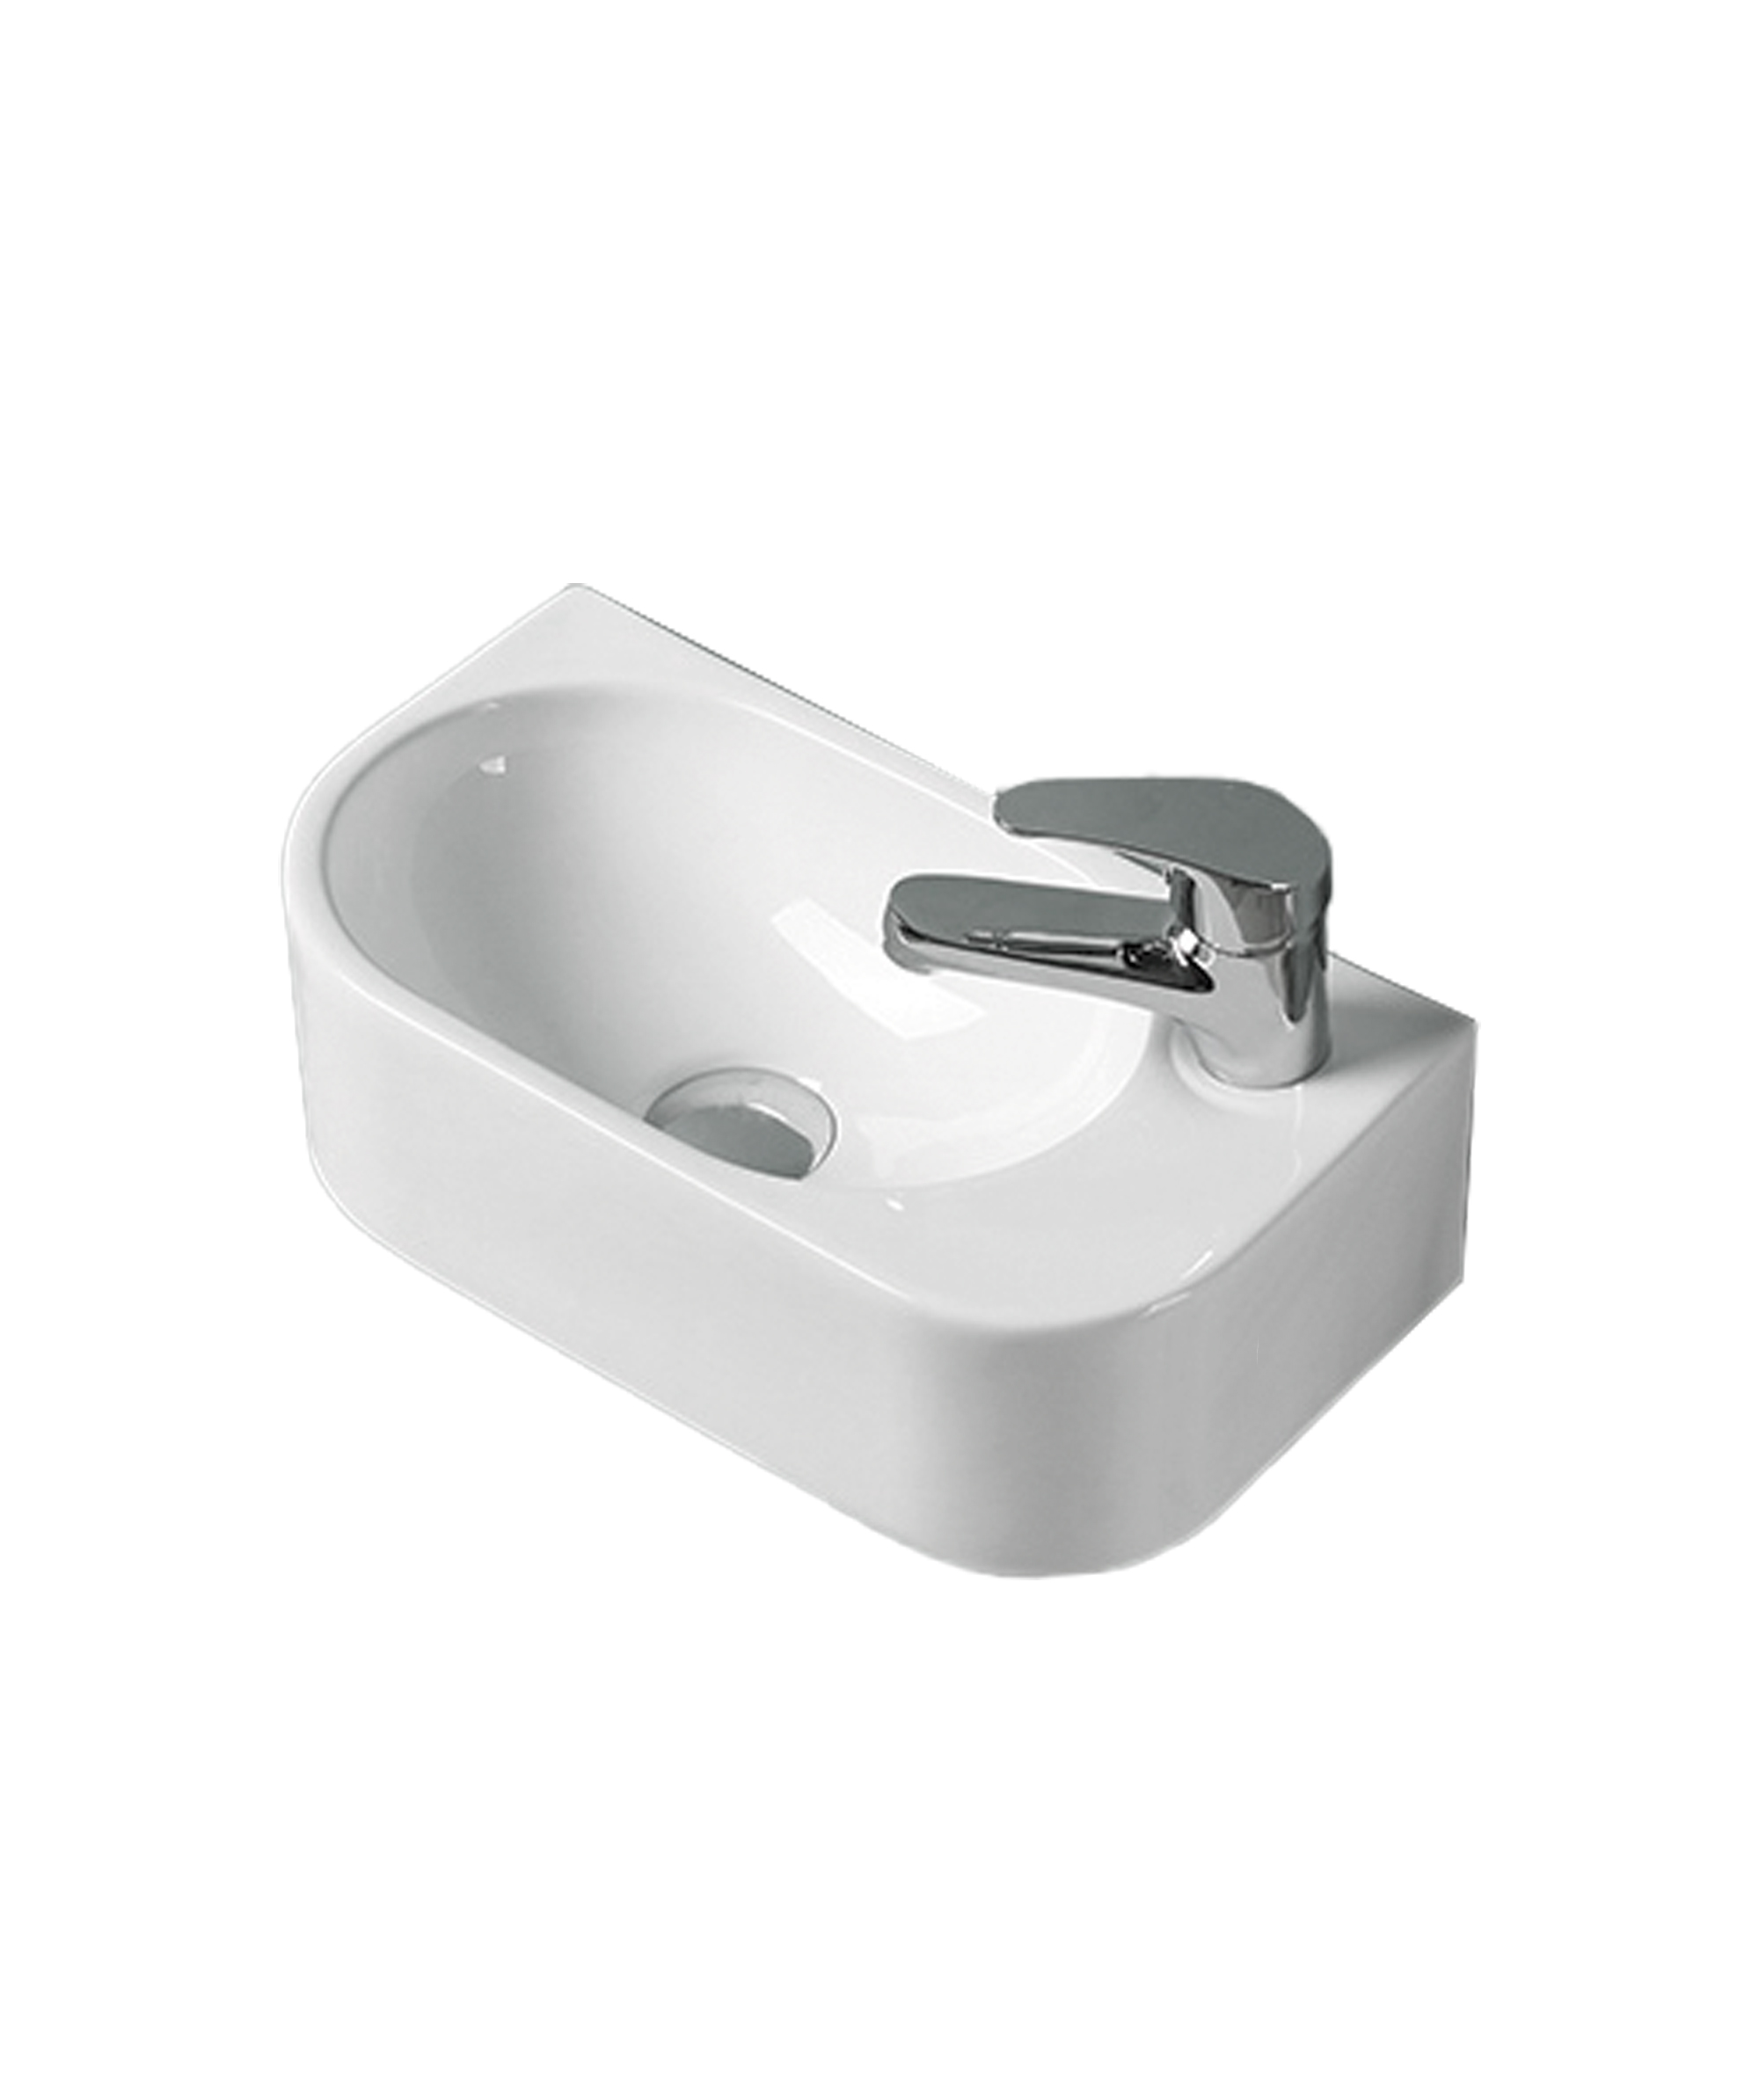 Arko 485 ceramic basin - White Gloss